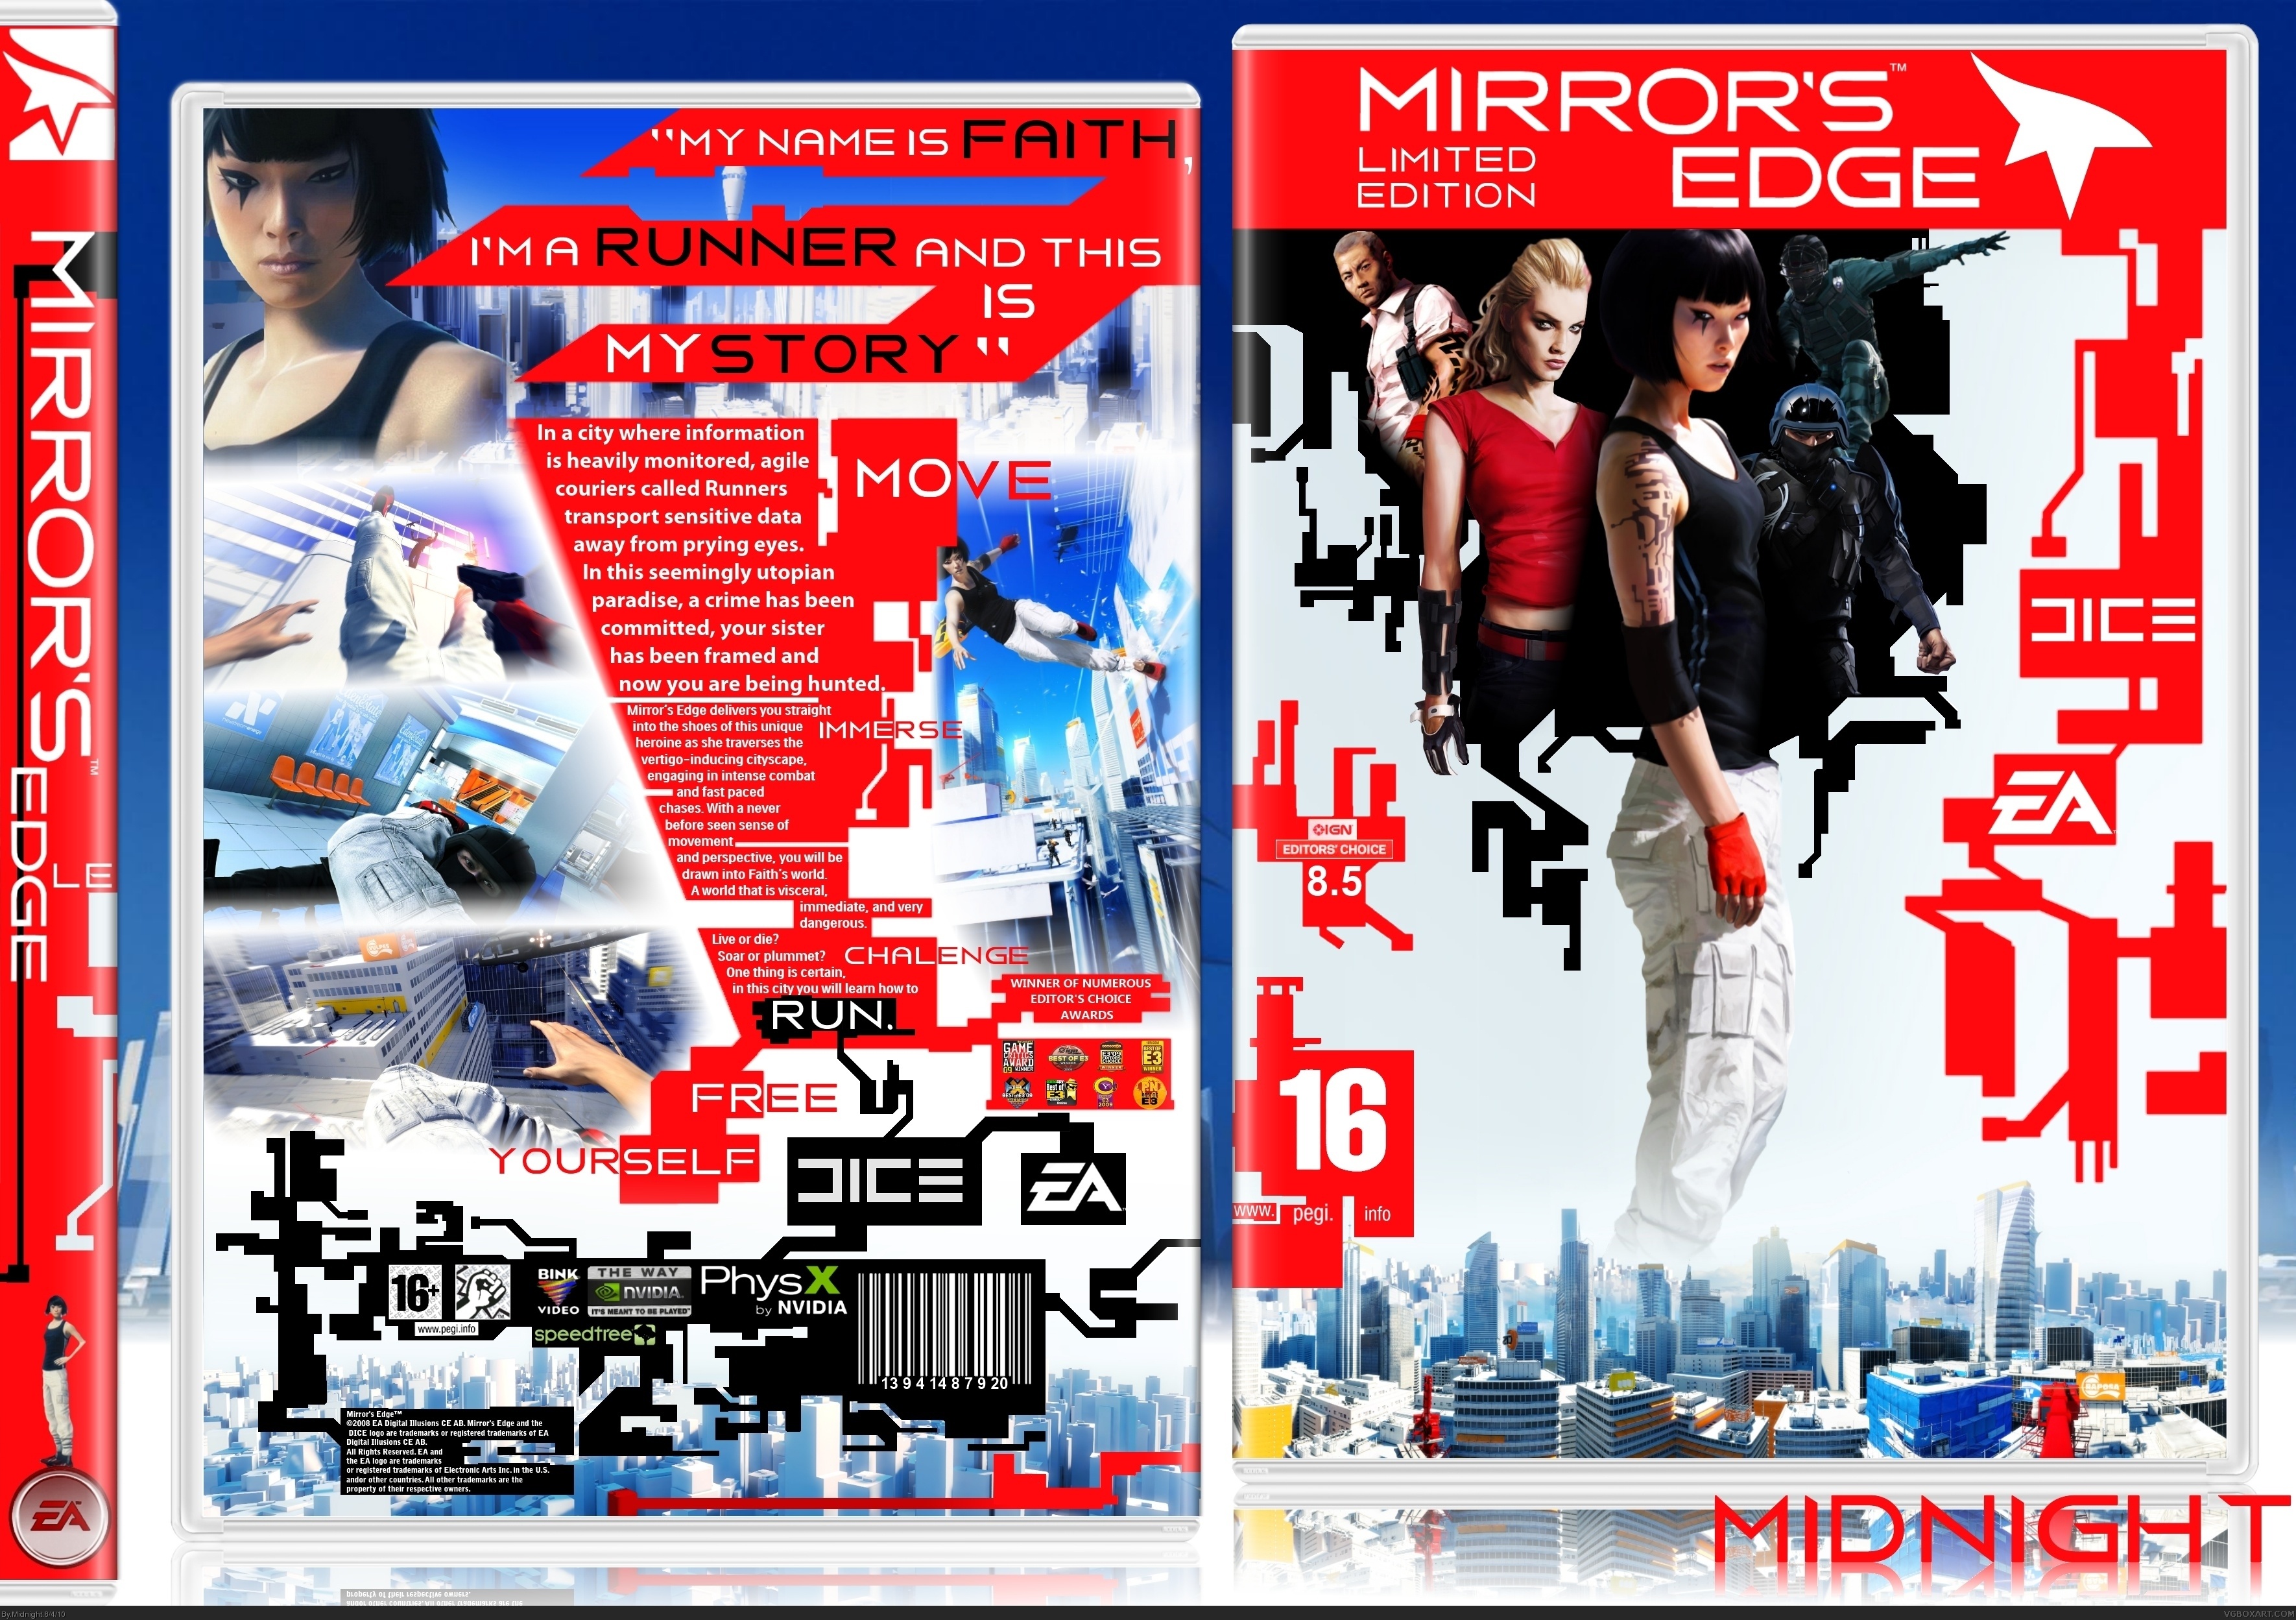 Mirror's Edge Limited Edition box cover